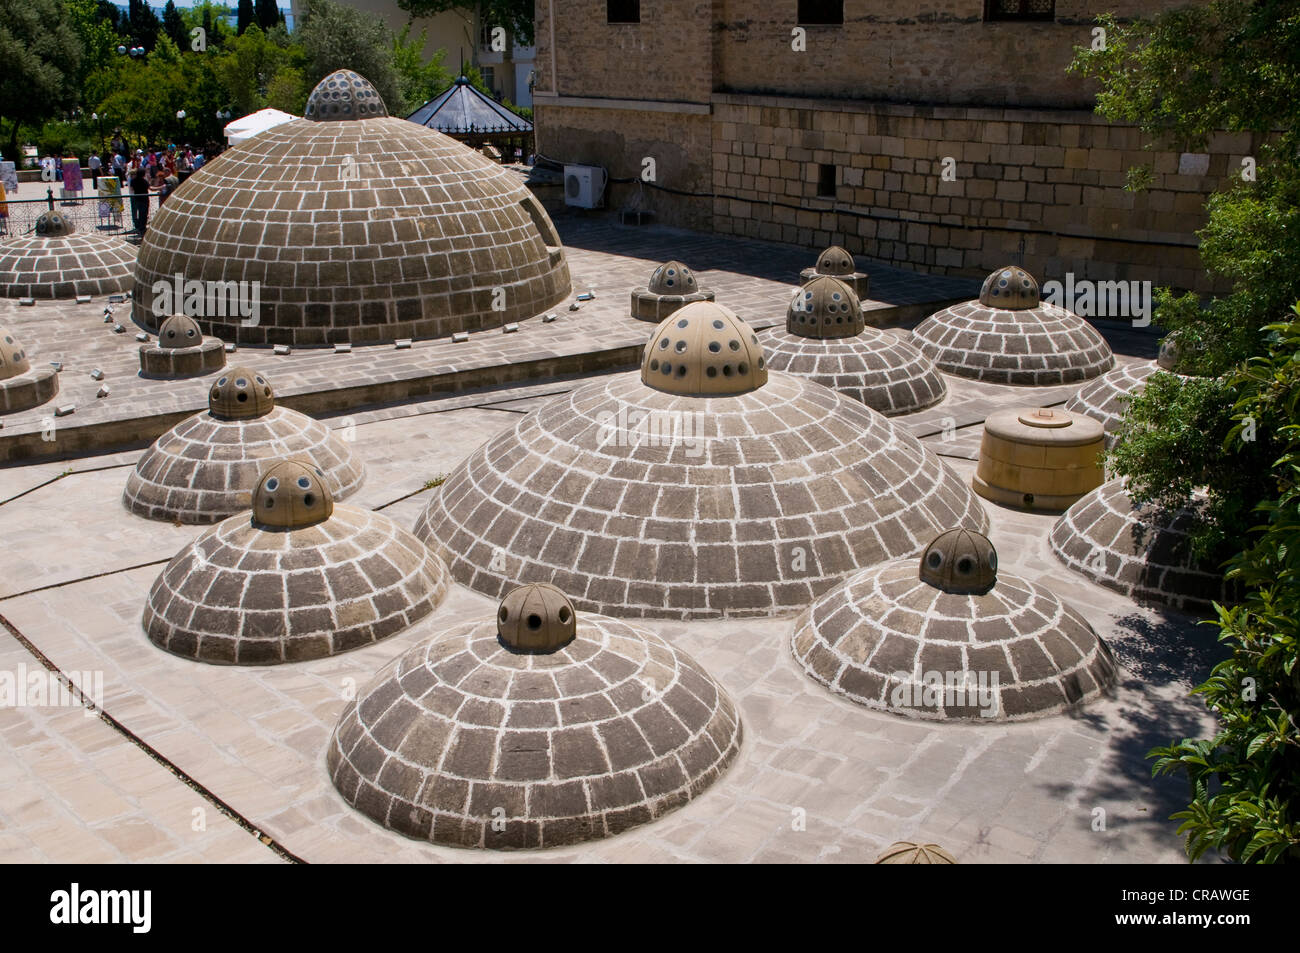 Historic hammam in the city centre, Baku, Azerbaijan, Caucasus region, Middle East Stock Photo